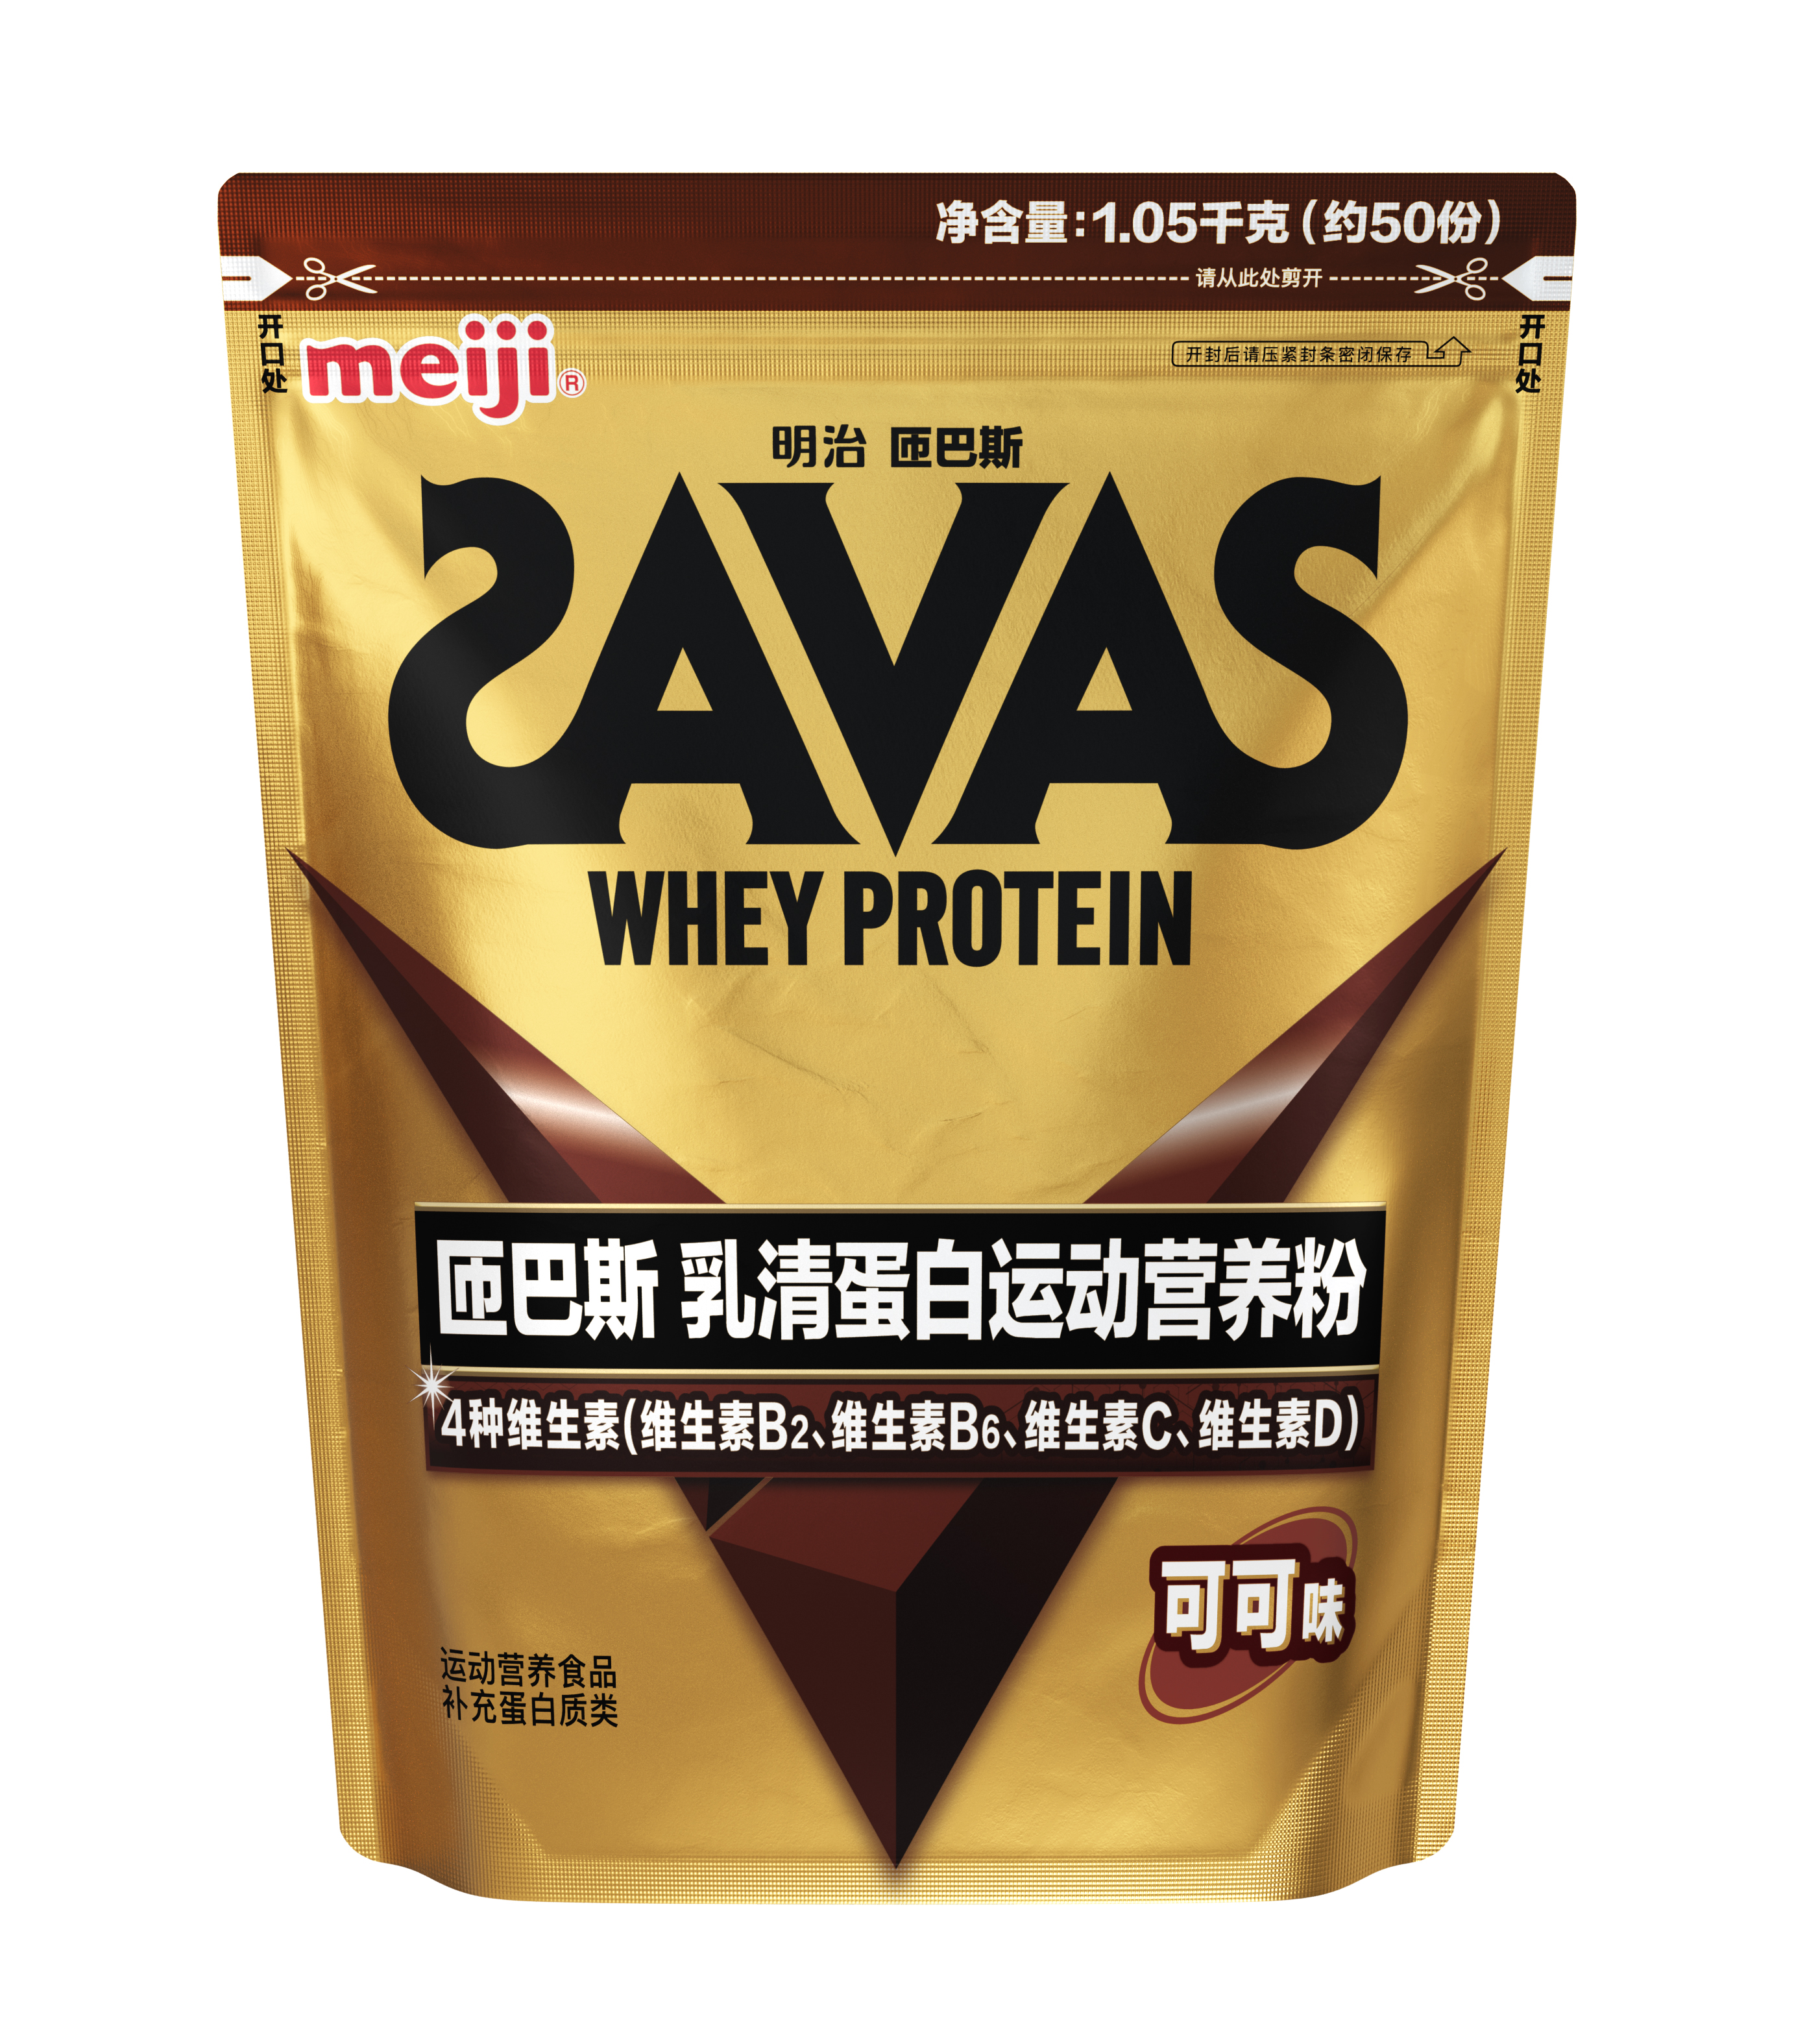 A photo showing SAVAS product.